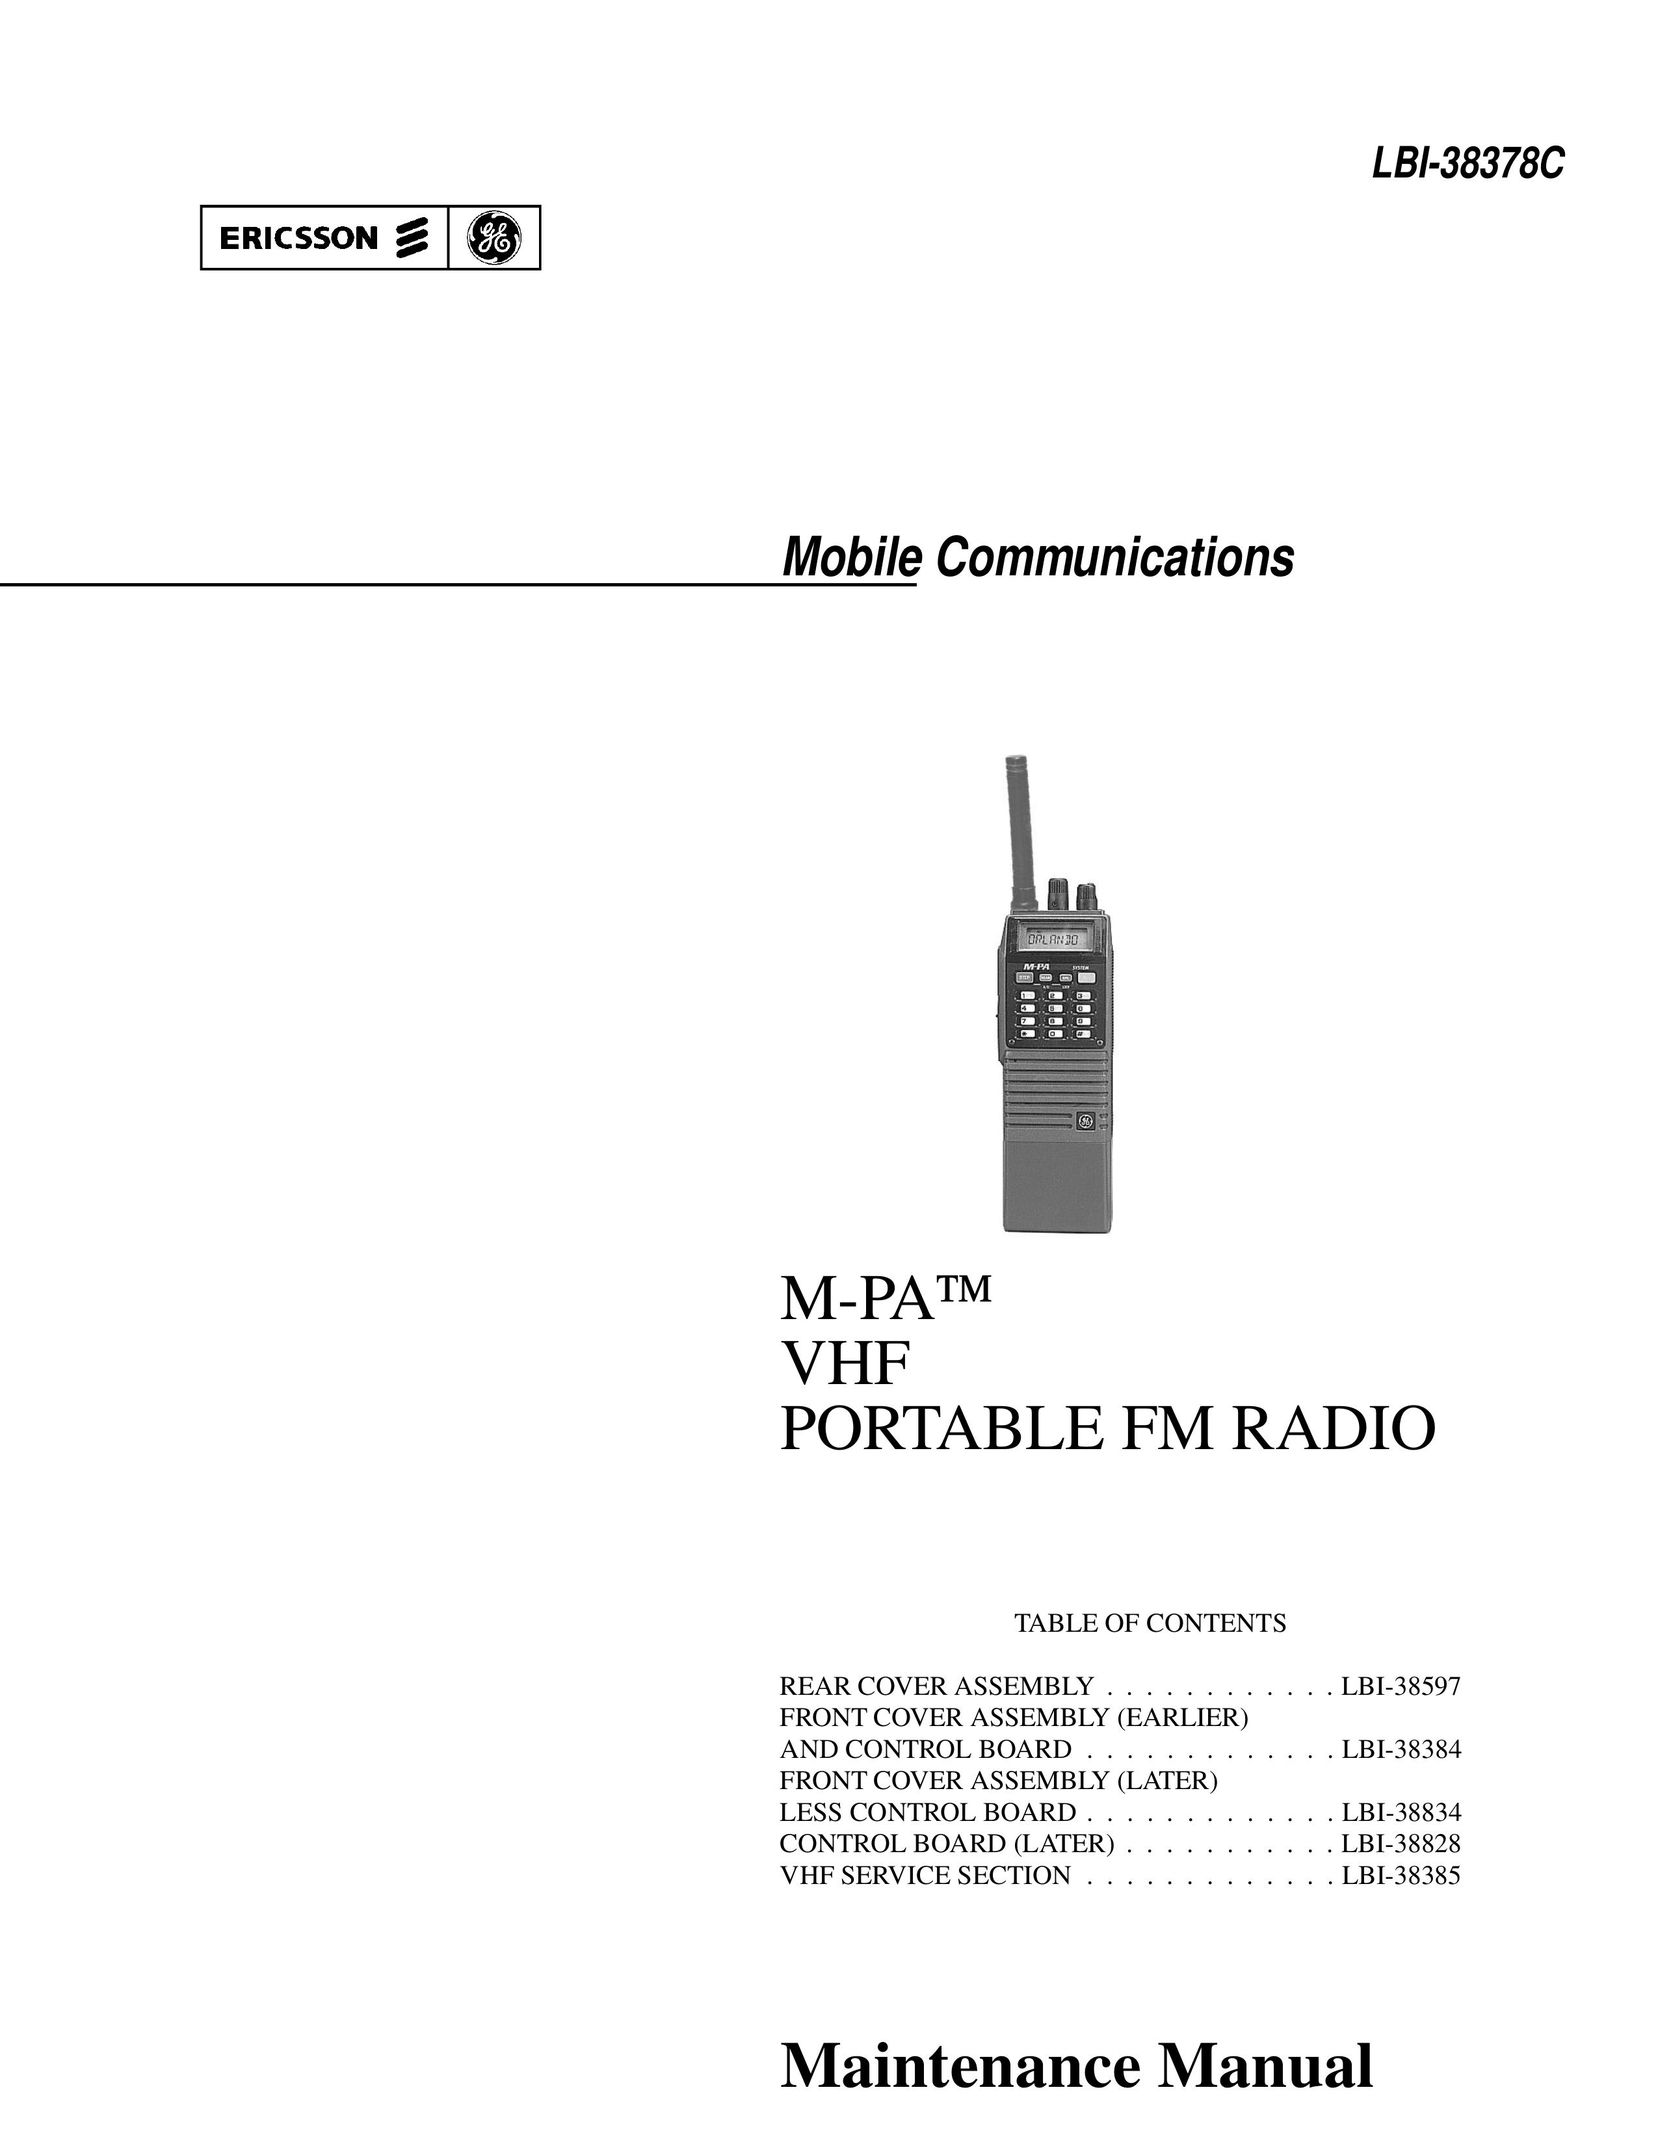 GE LBI-38378C Portable Radio User Manual